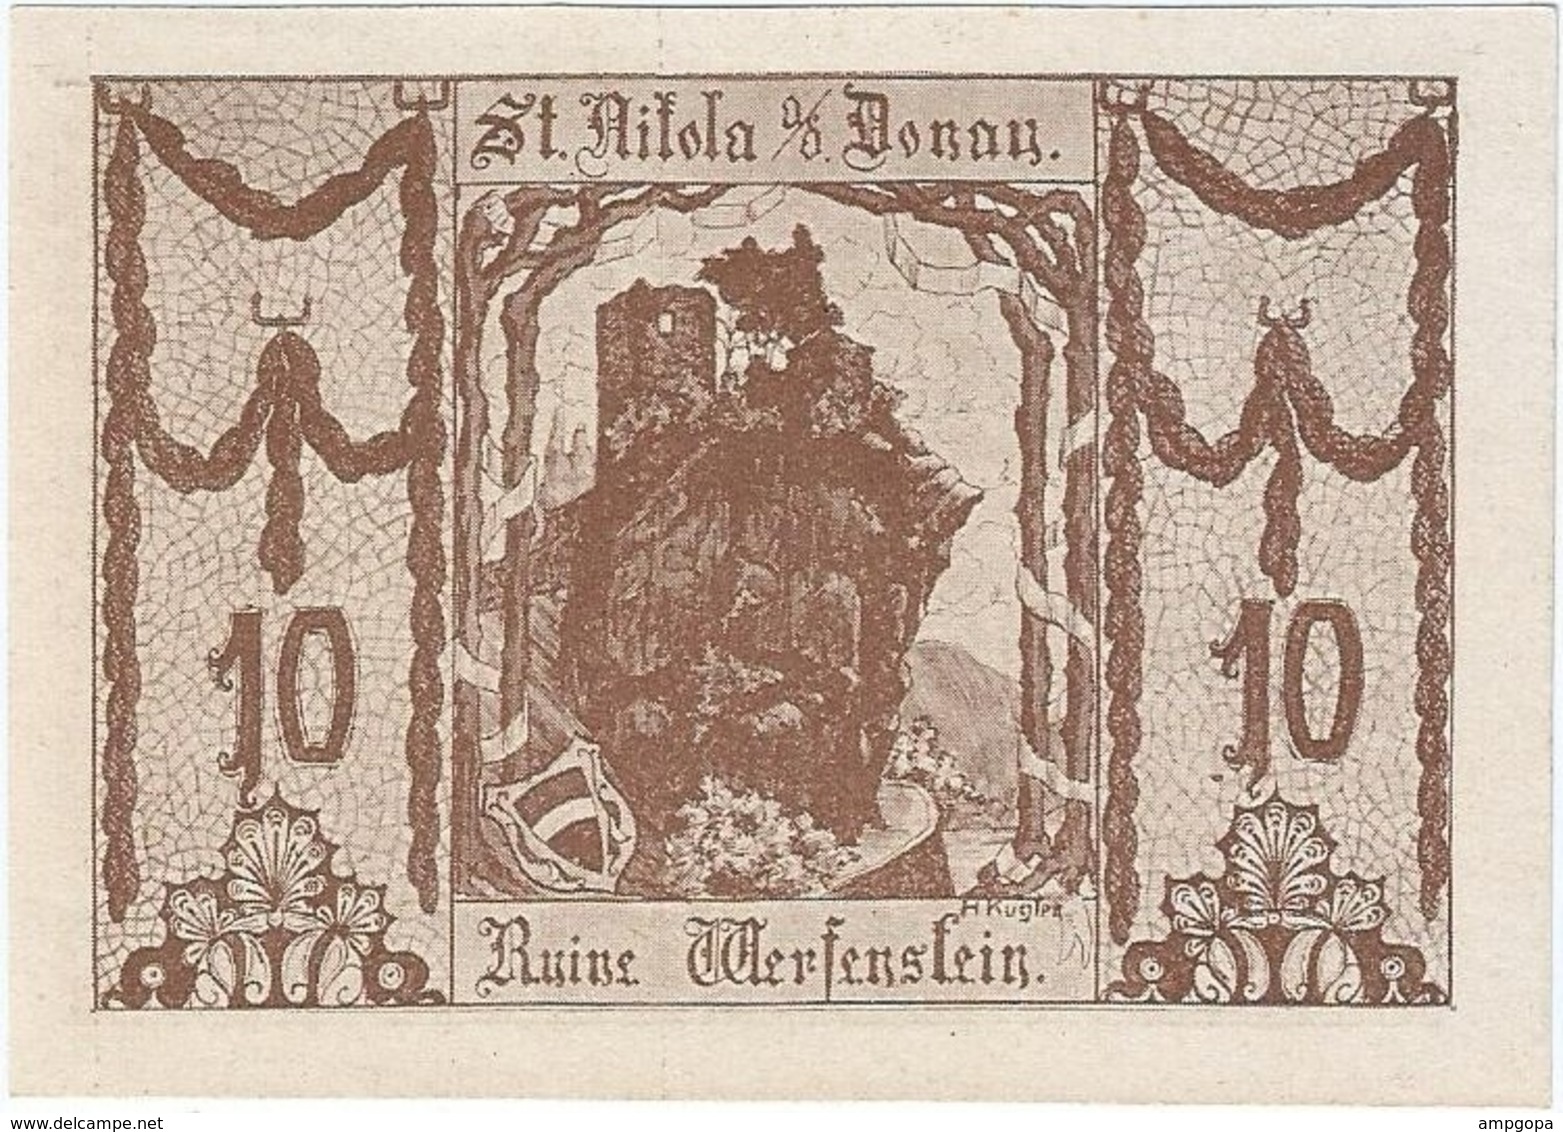 Austria (NOTGELD) 10 Heller Sankt Nikola Donau 31-12-1920 Kon 914 III.a.1  UNC Ref 3661-1 - Austria